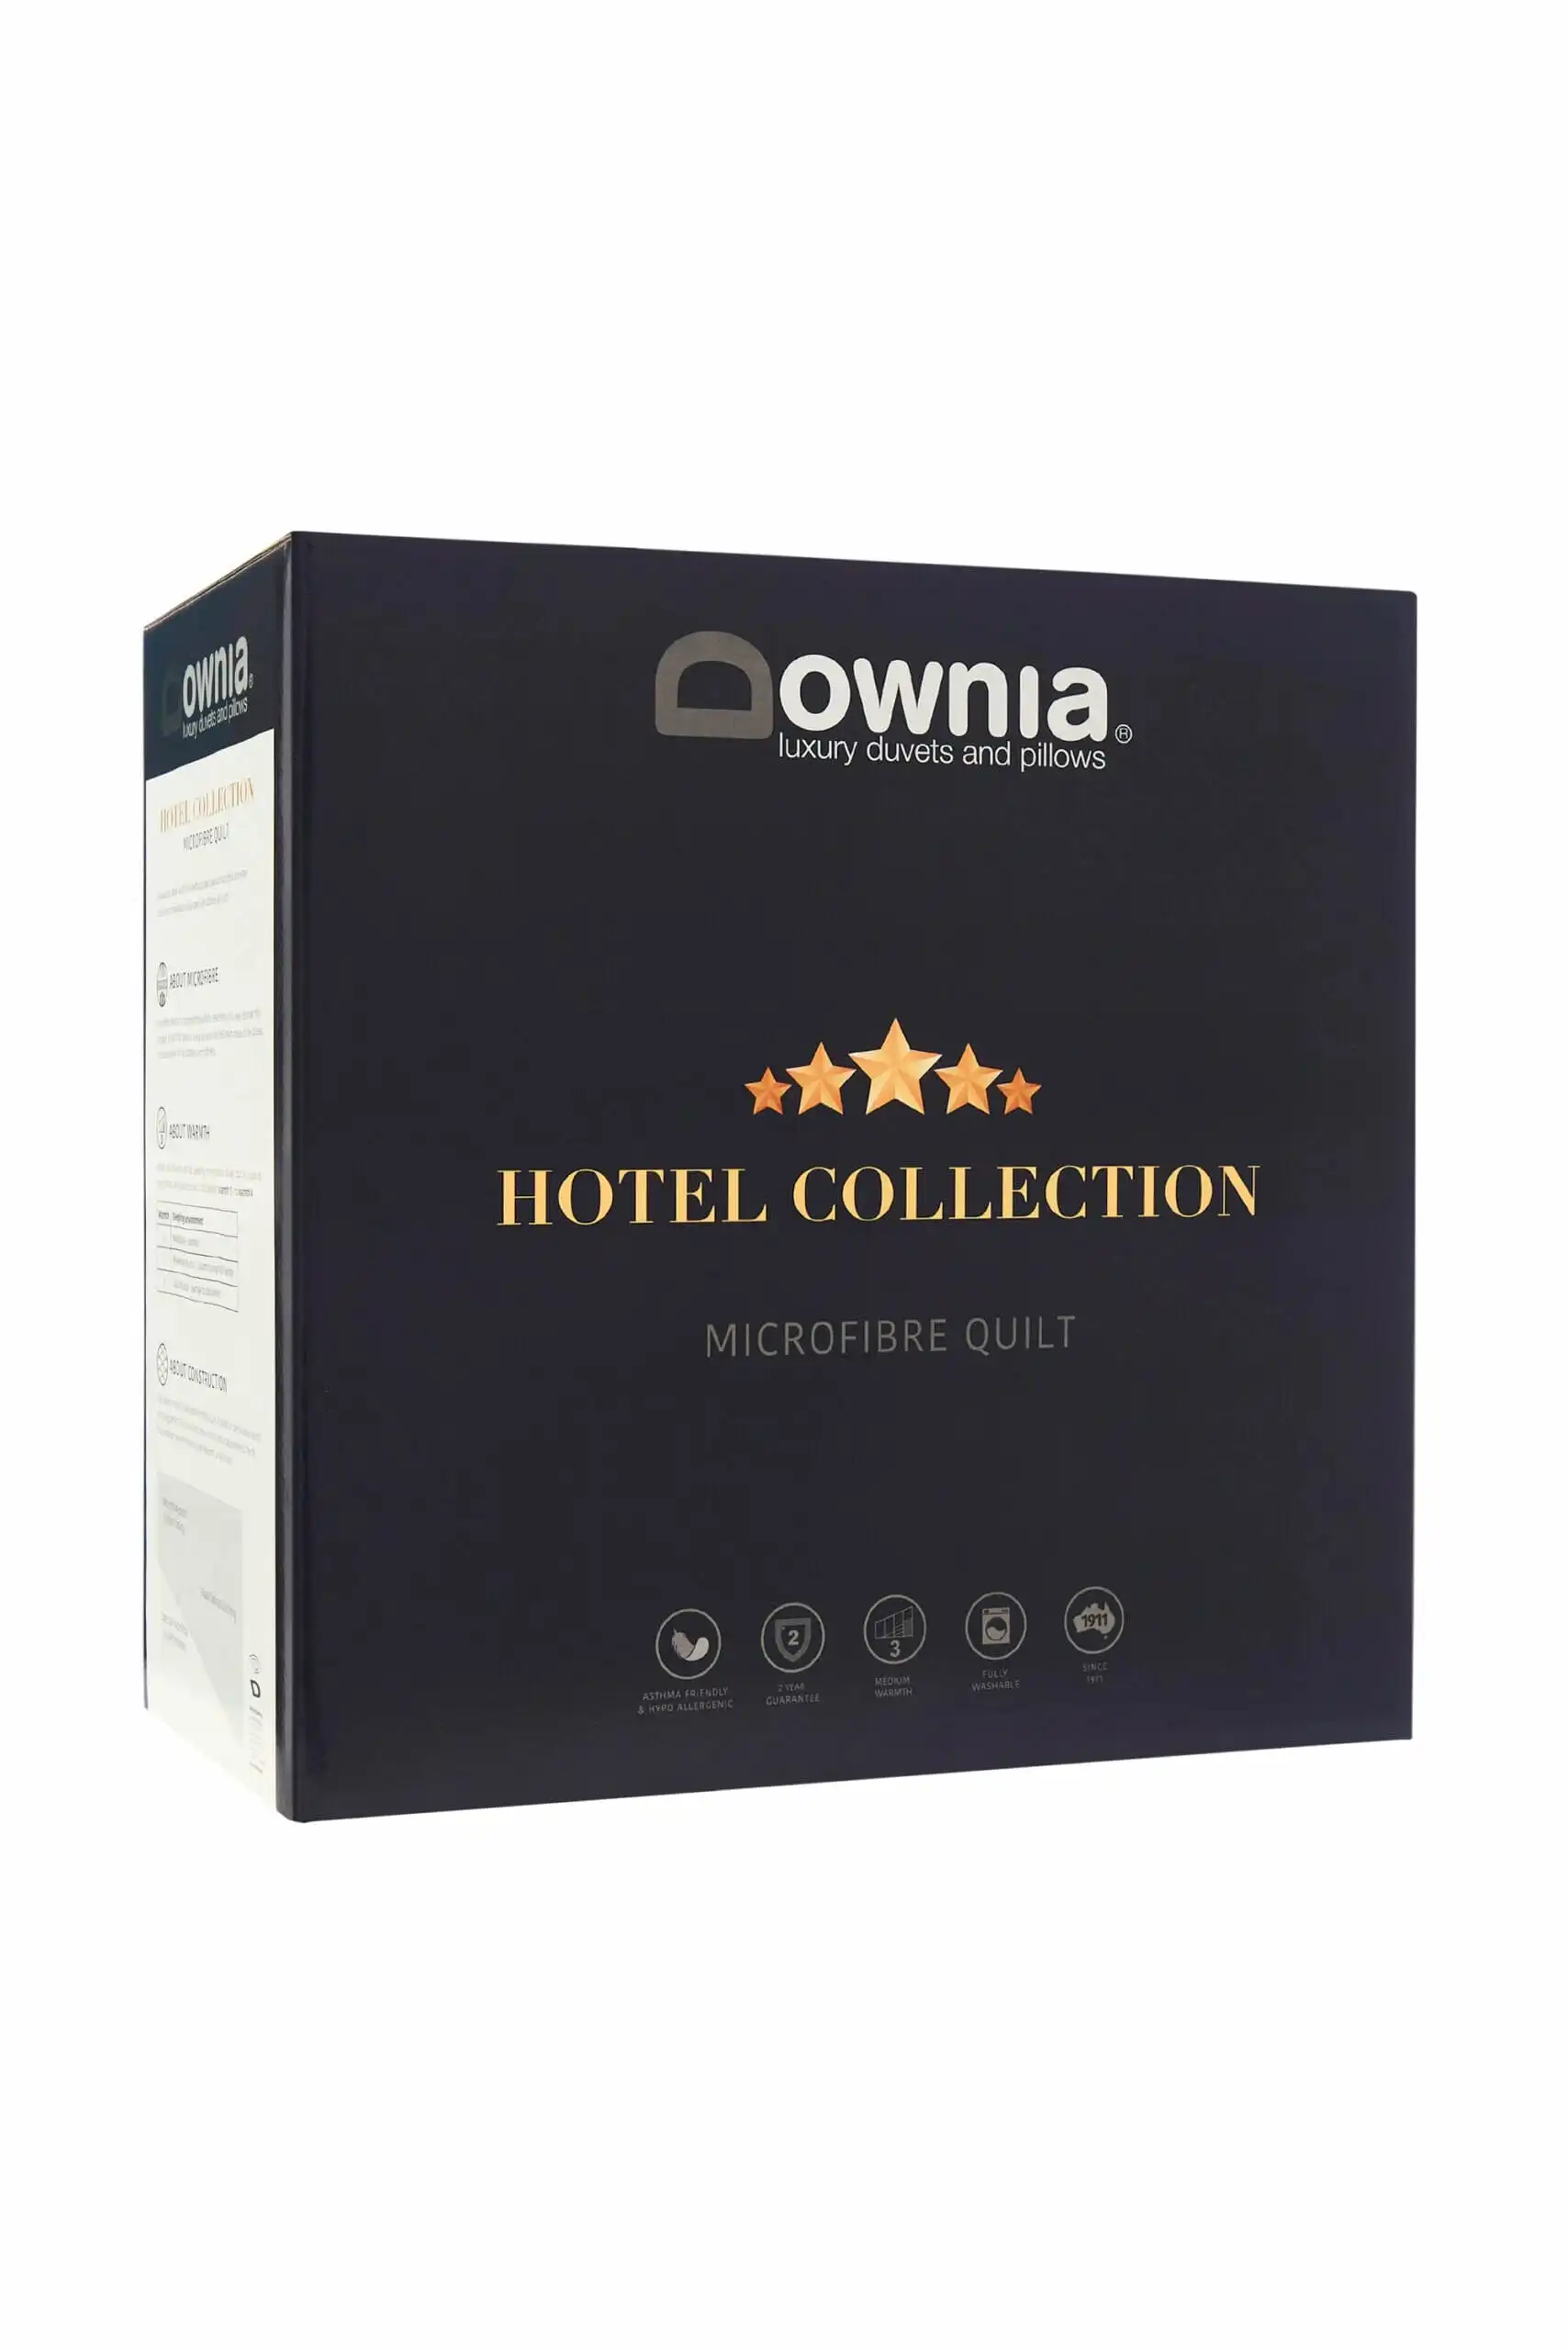 Downia HOTEL MICROFIBRE Quilt